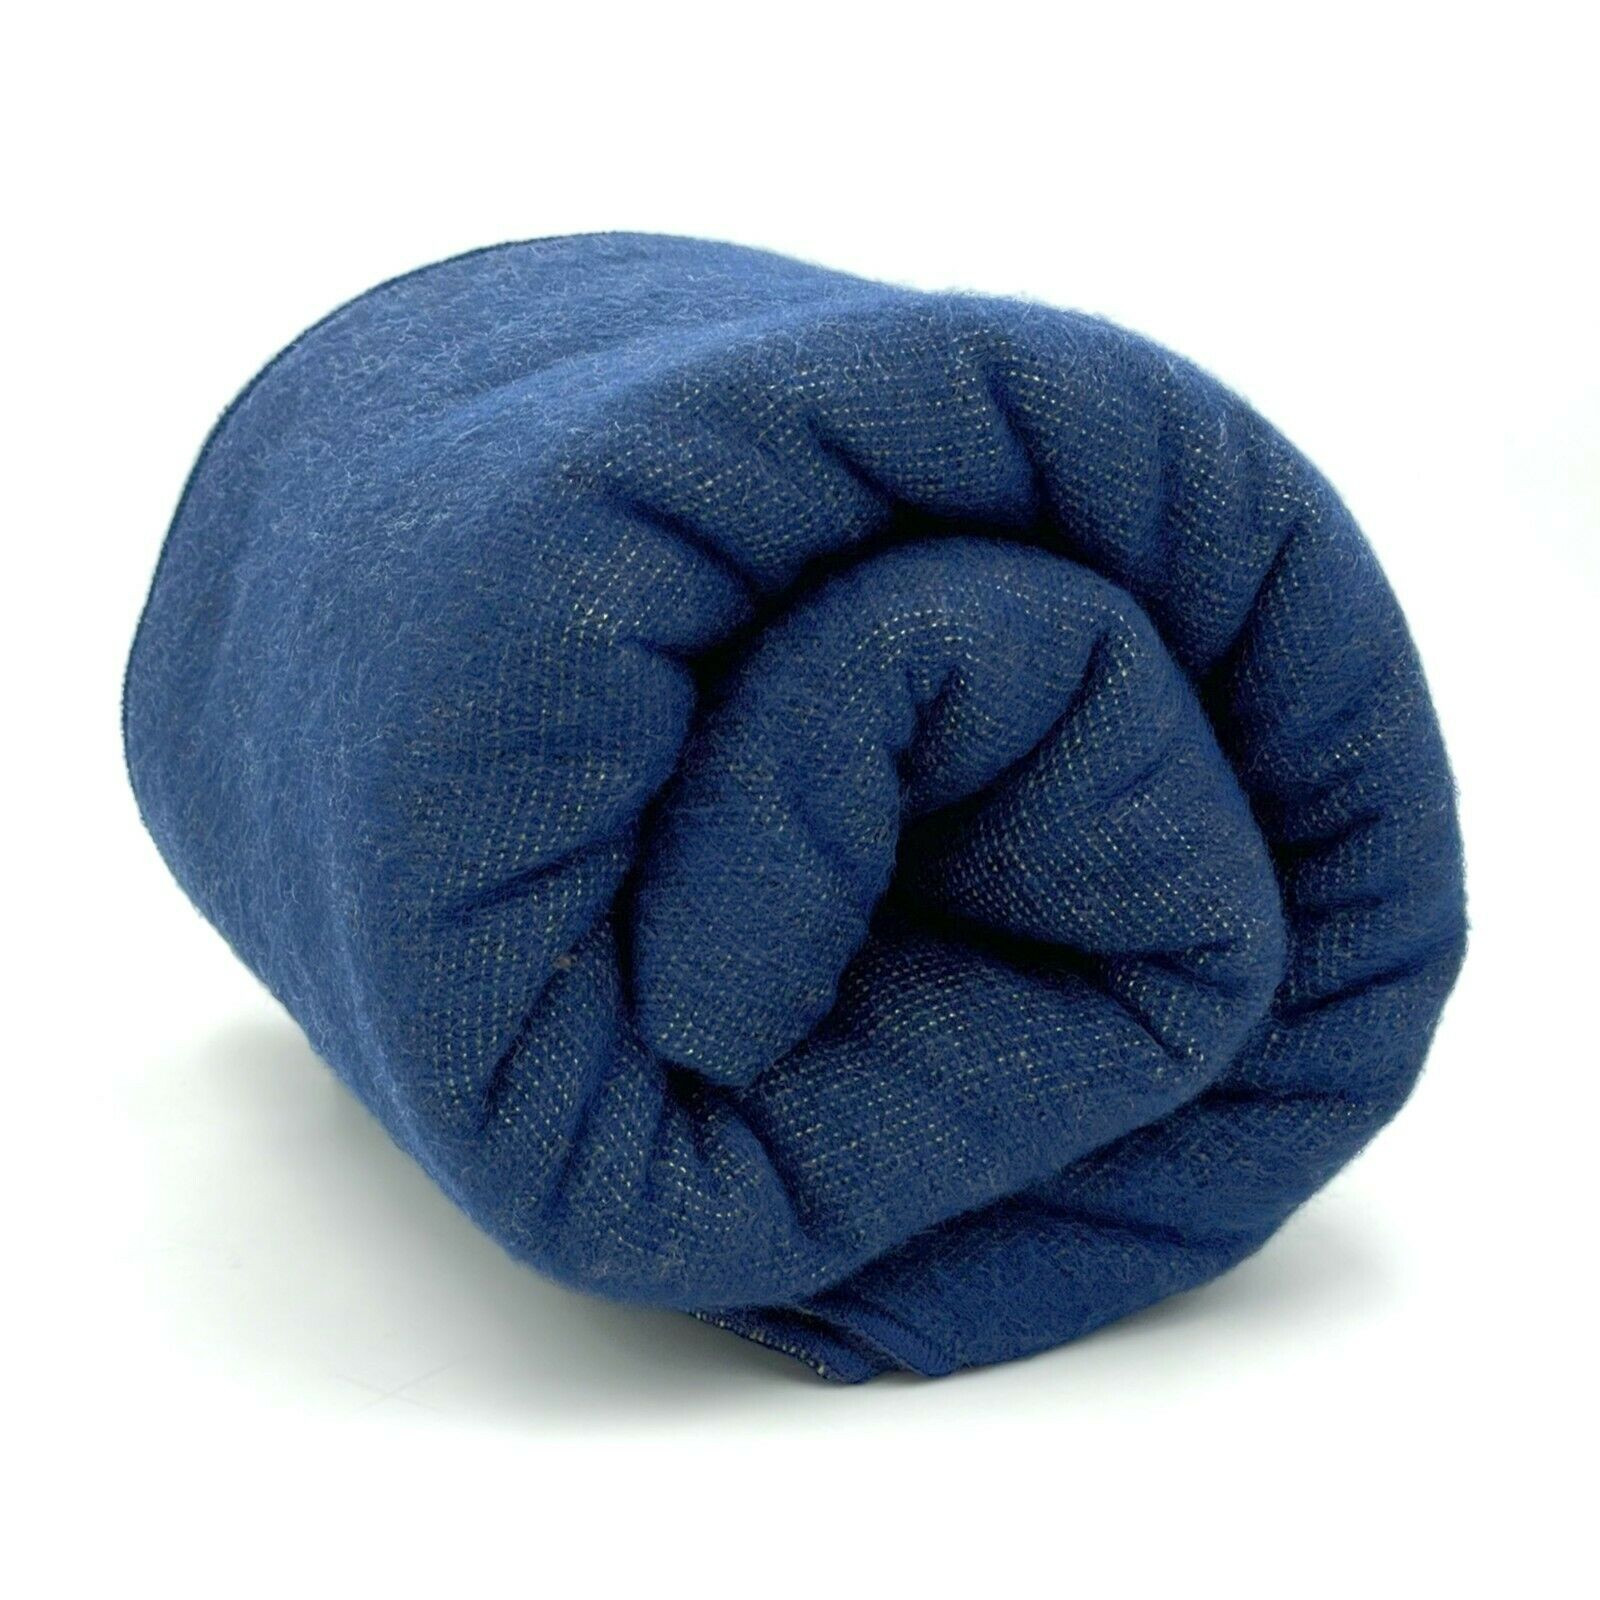 Quillualpa - Baby Alpaca Blanket - Extra Large - Solid reversible - navy blue/cream